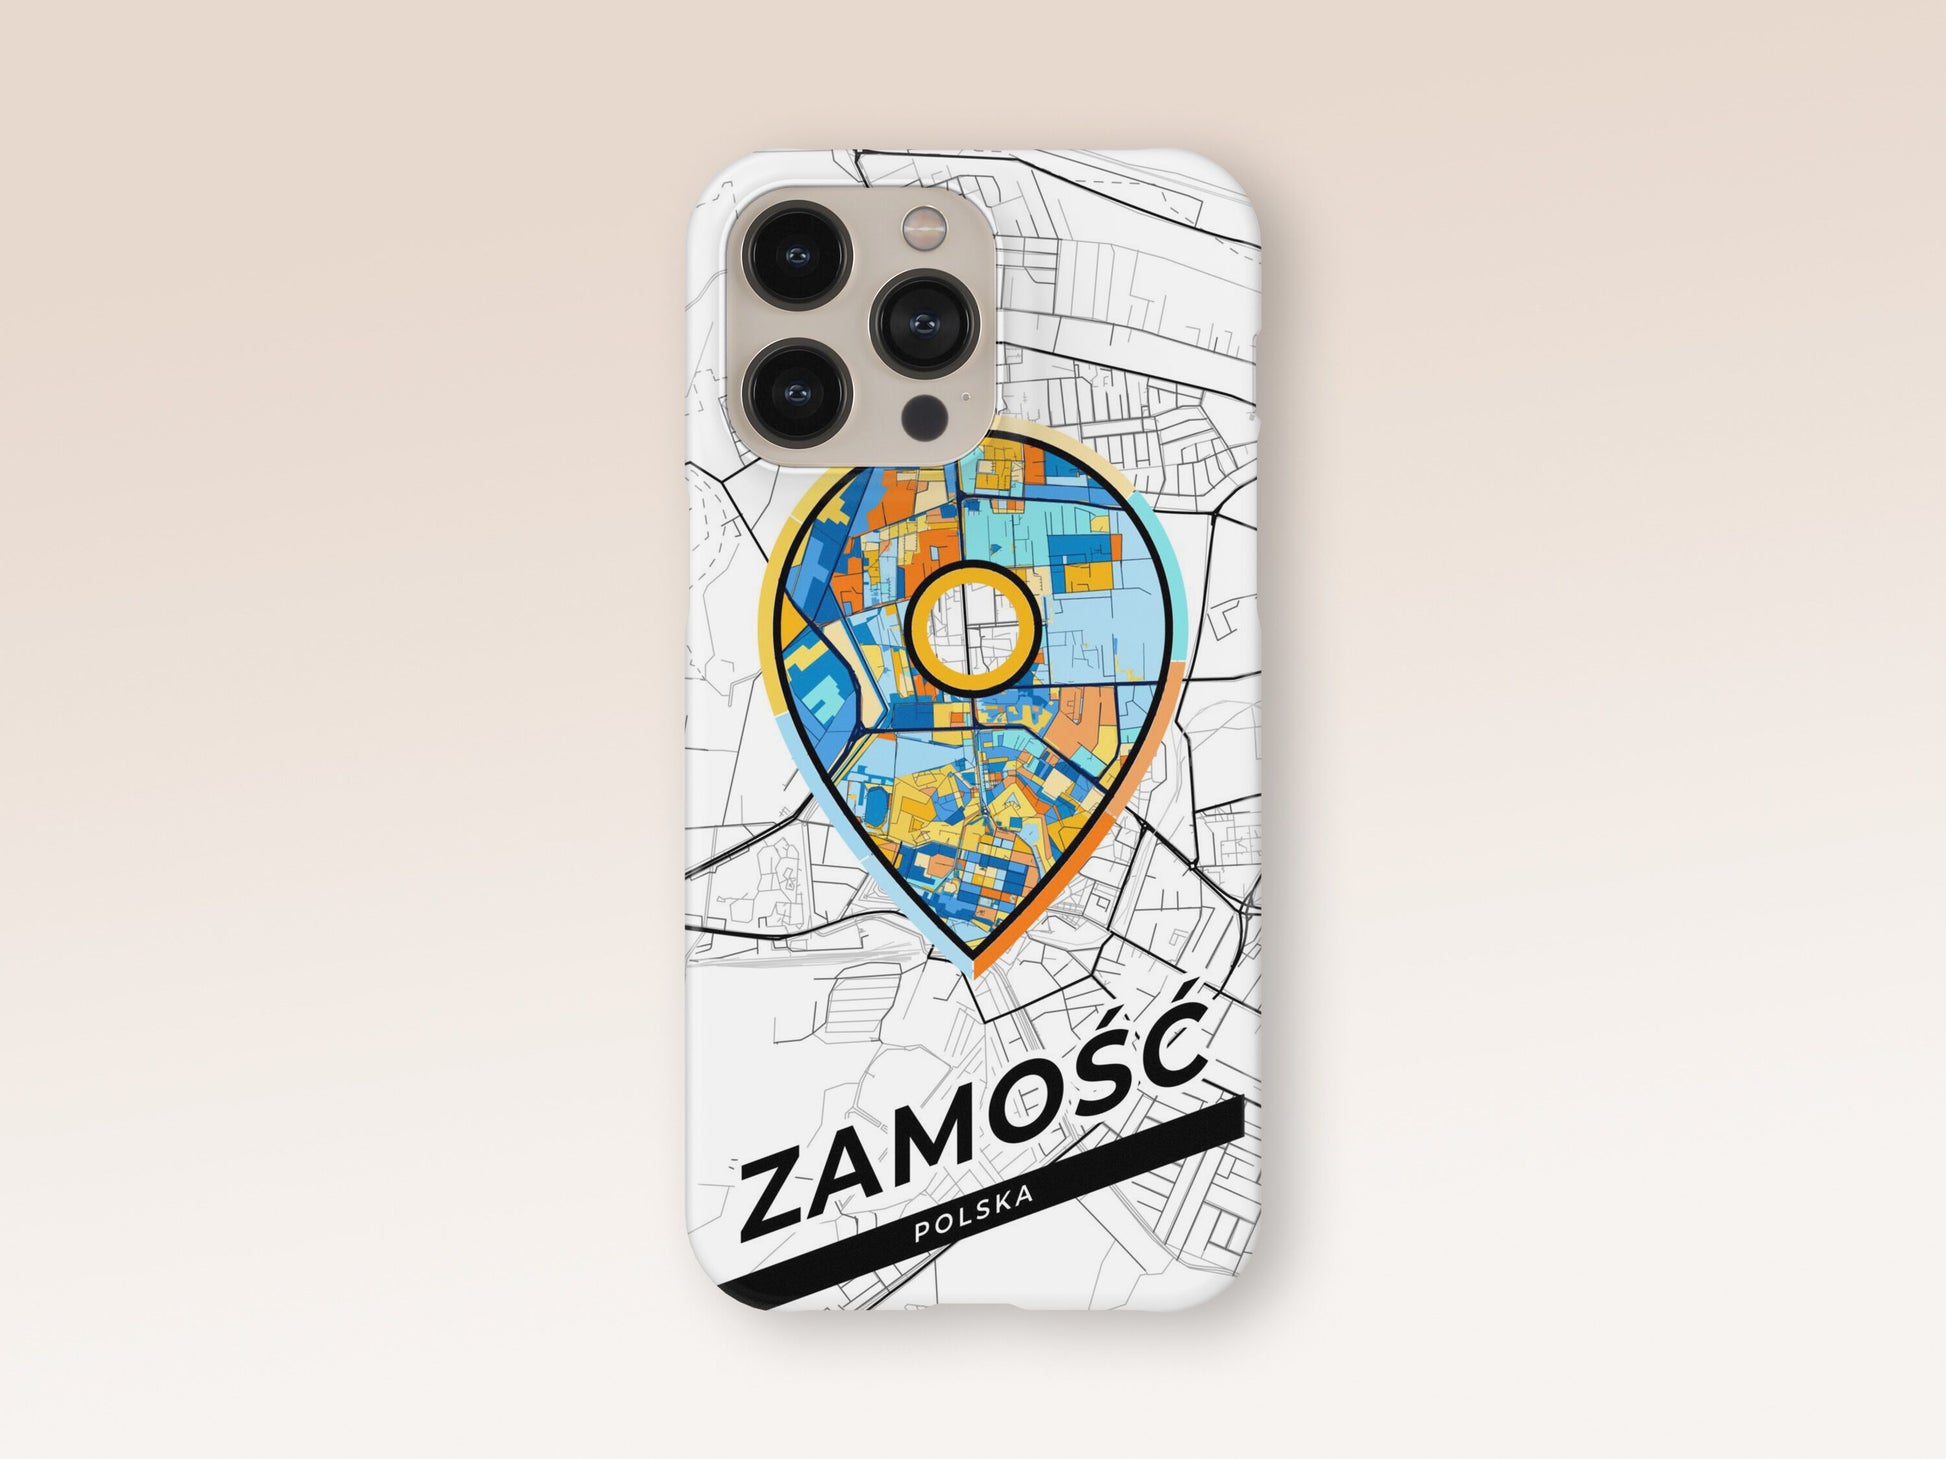 Zamość Poland slim phone case with colorful icon 1